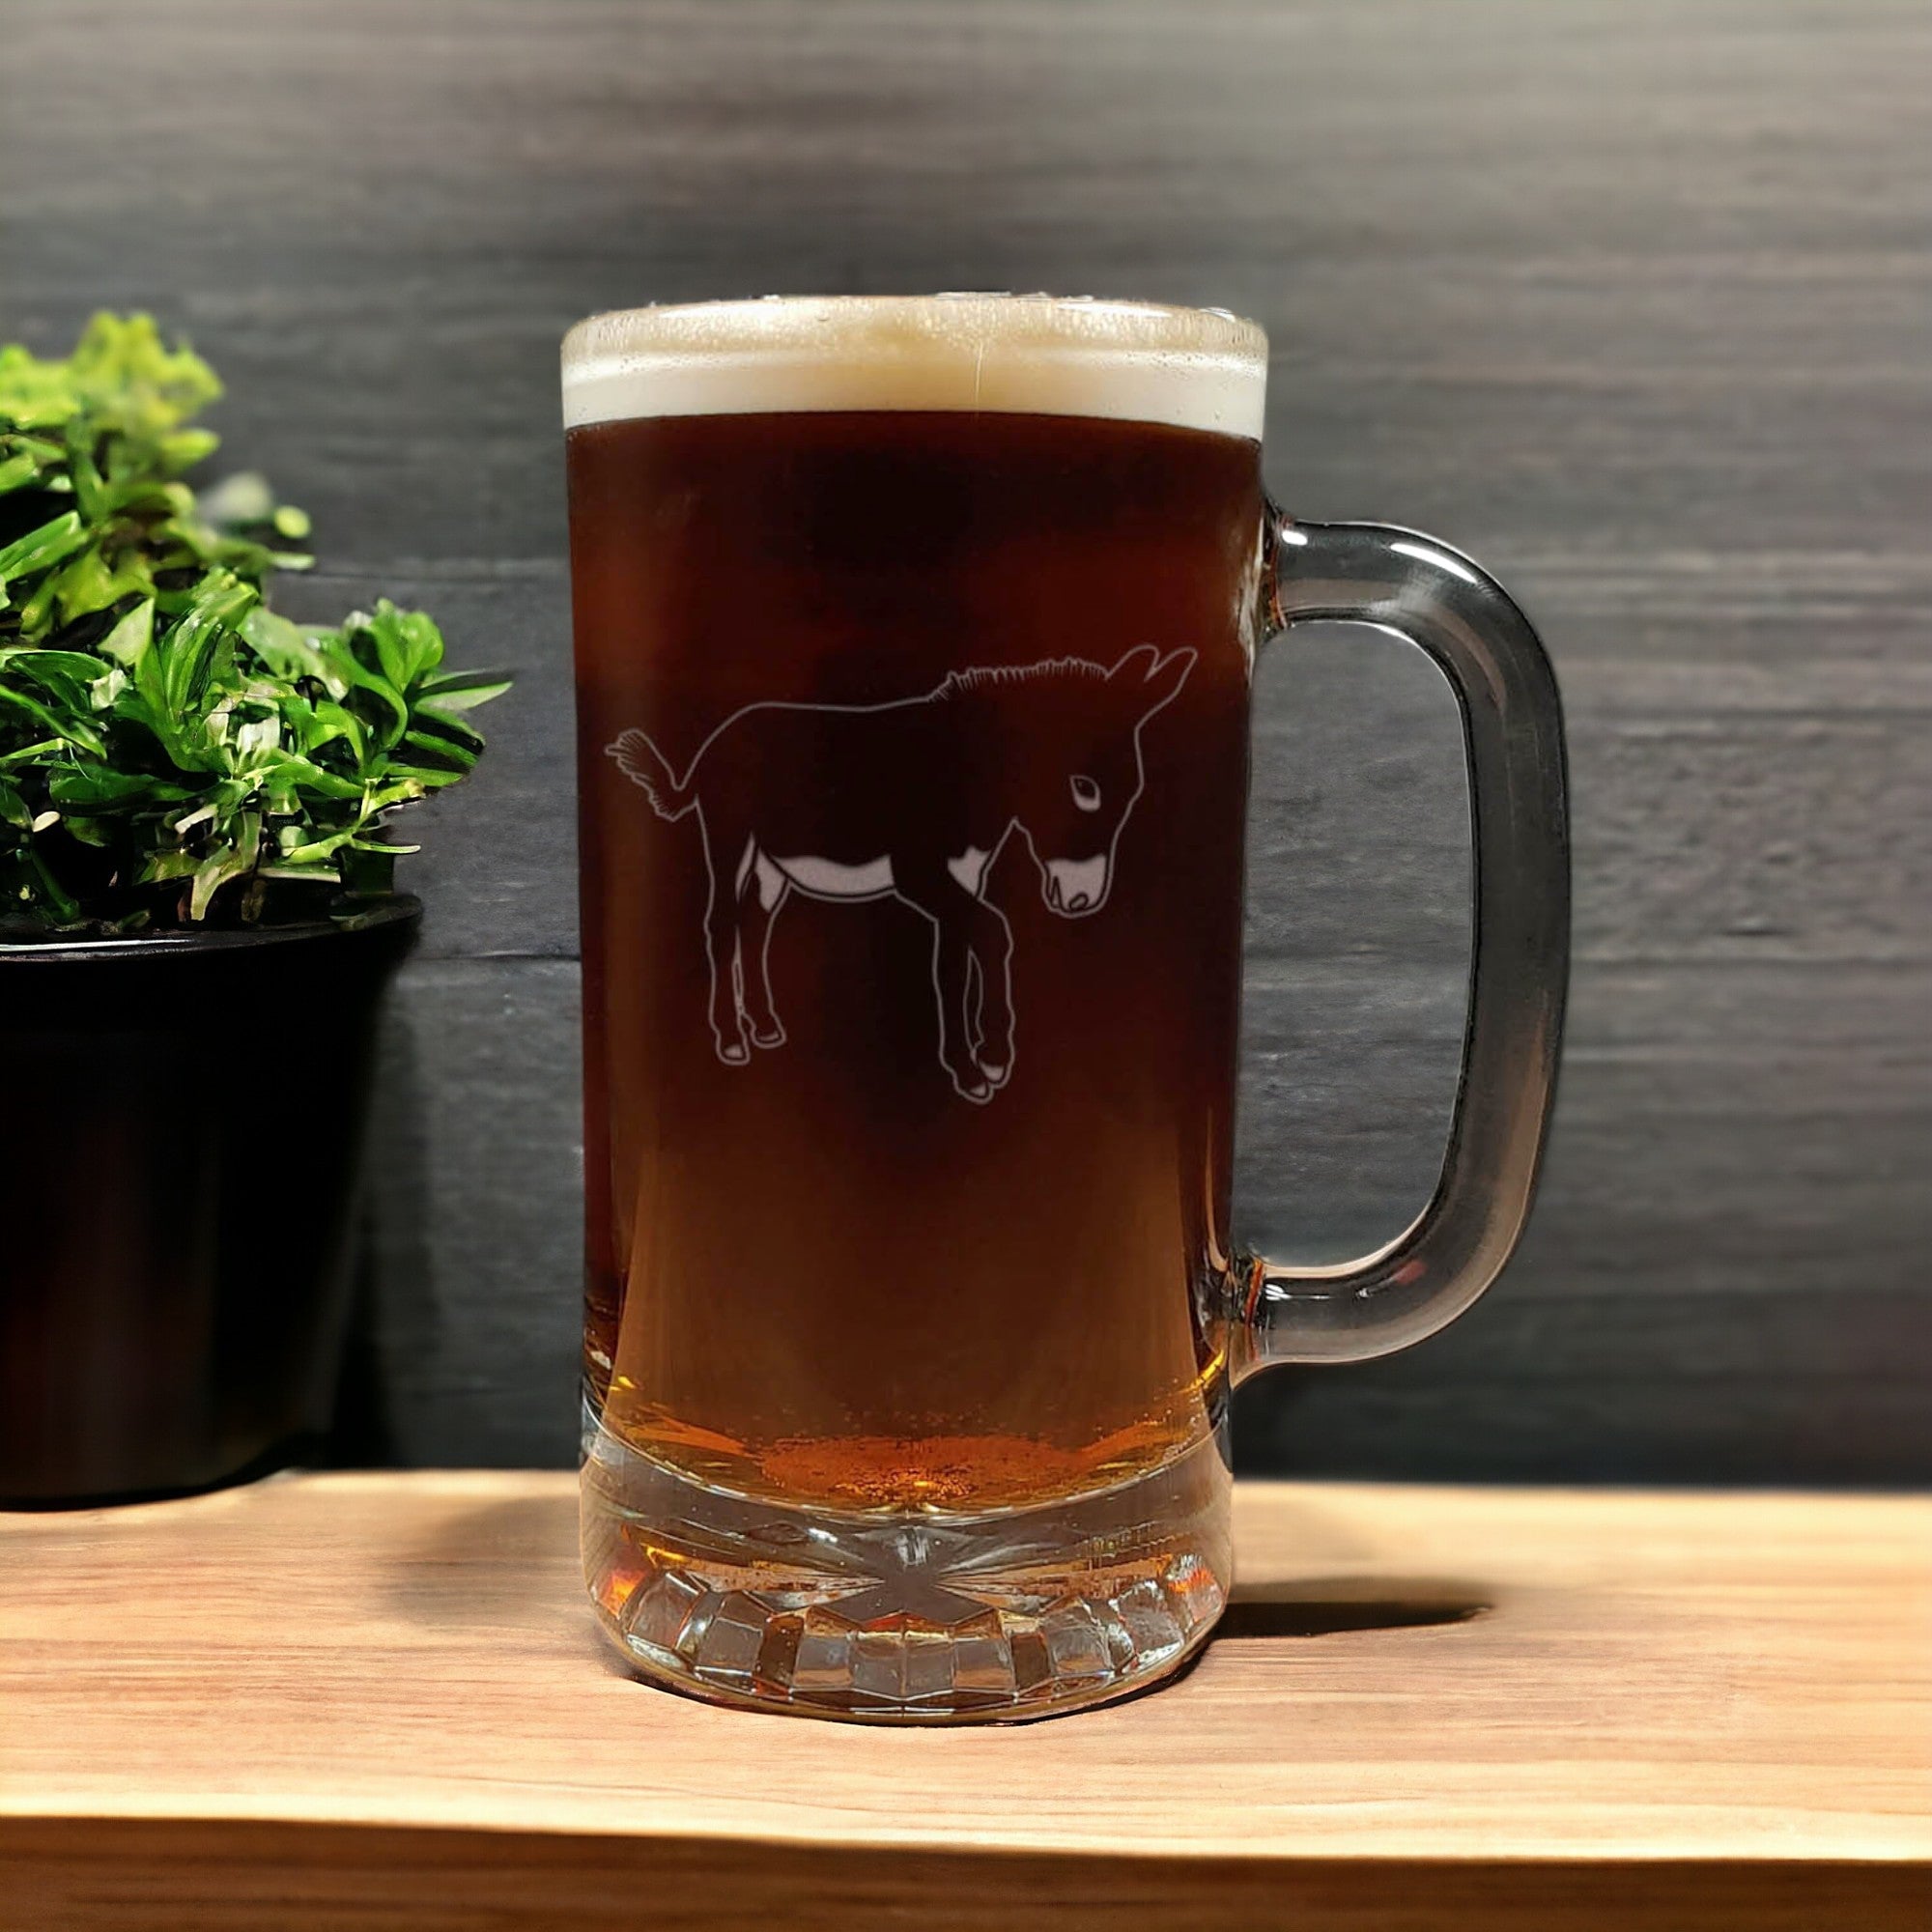 Donkey Beer Mug with Dark Beer - Design 3 - Copyright Hues in Glass